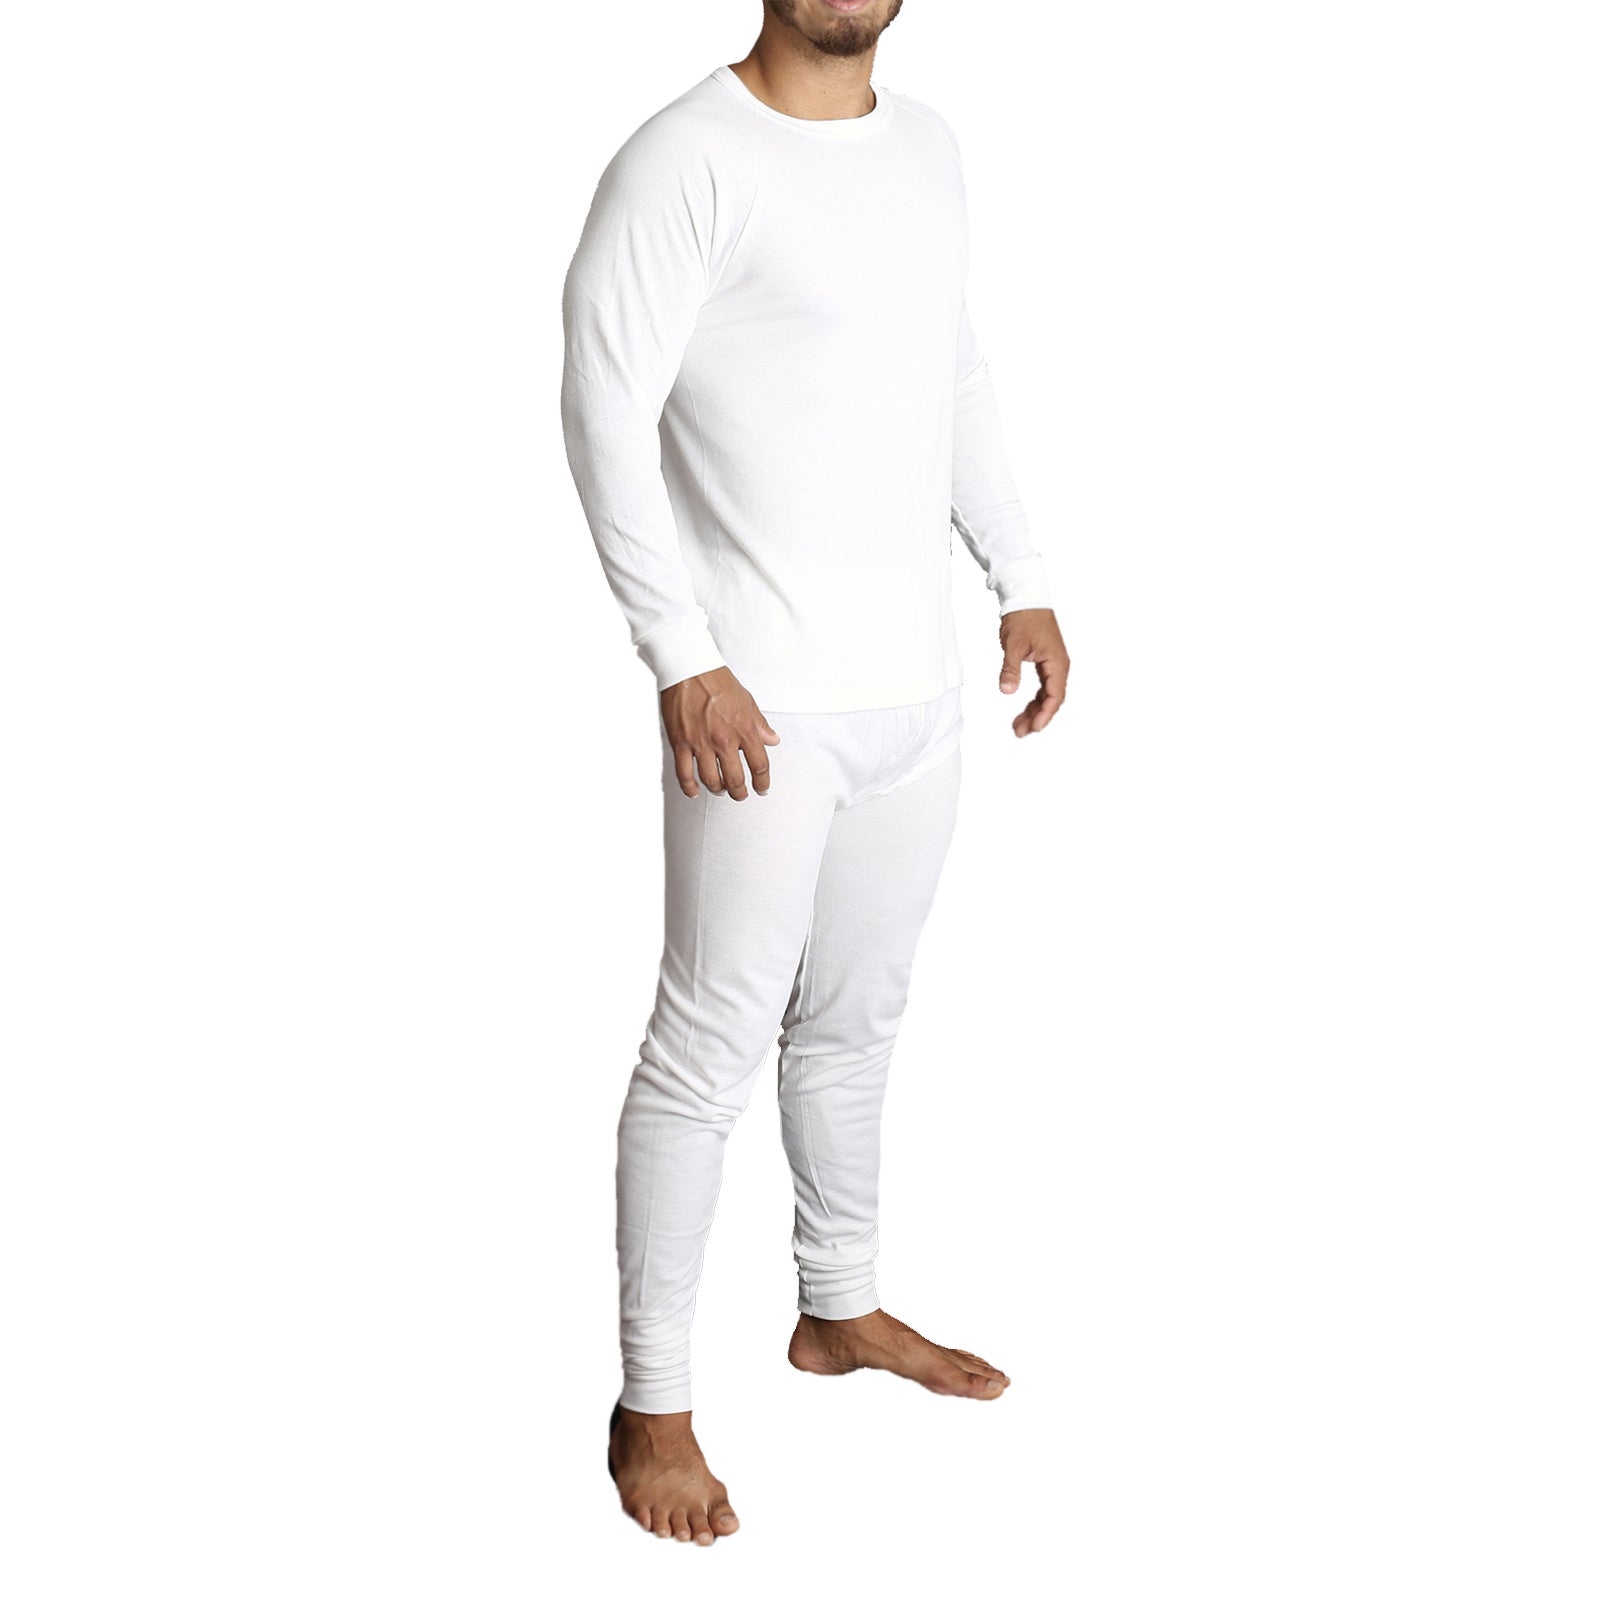 2pcs Set Men's Merino Wool Long Sleeve Thermal Top & Long Johns Pants Underwear